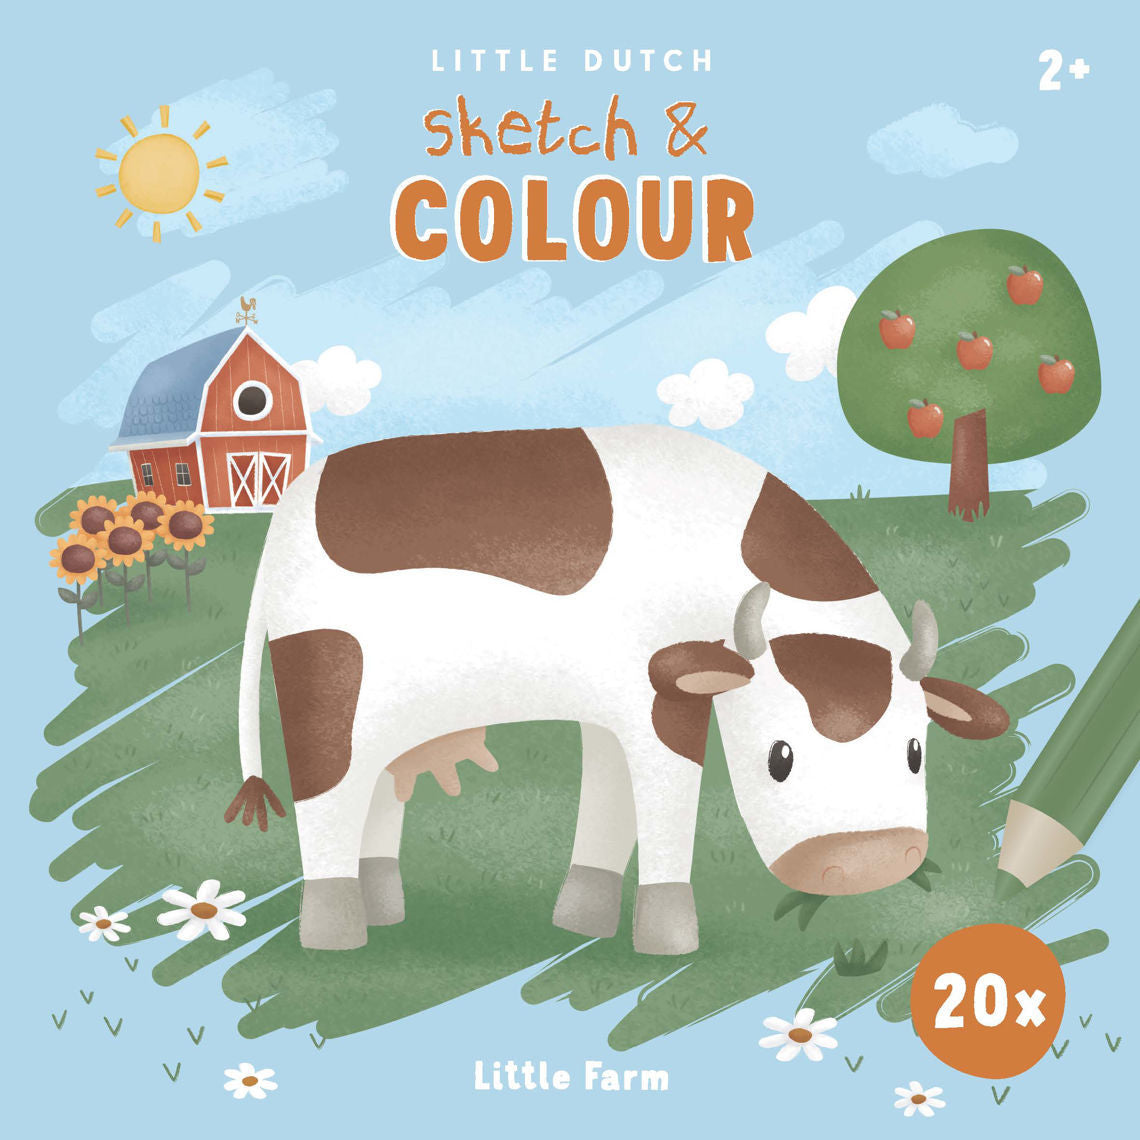 Sketch & Coloring Book Little Farm